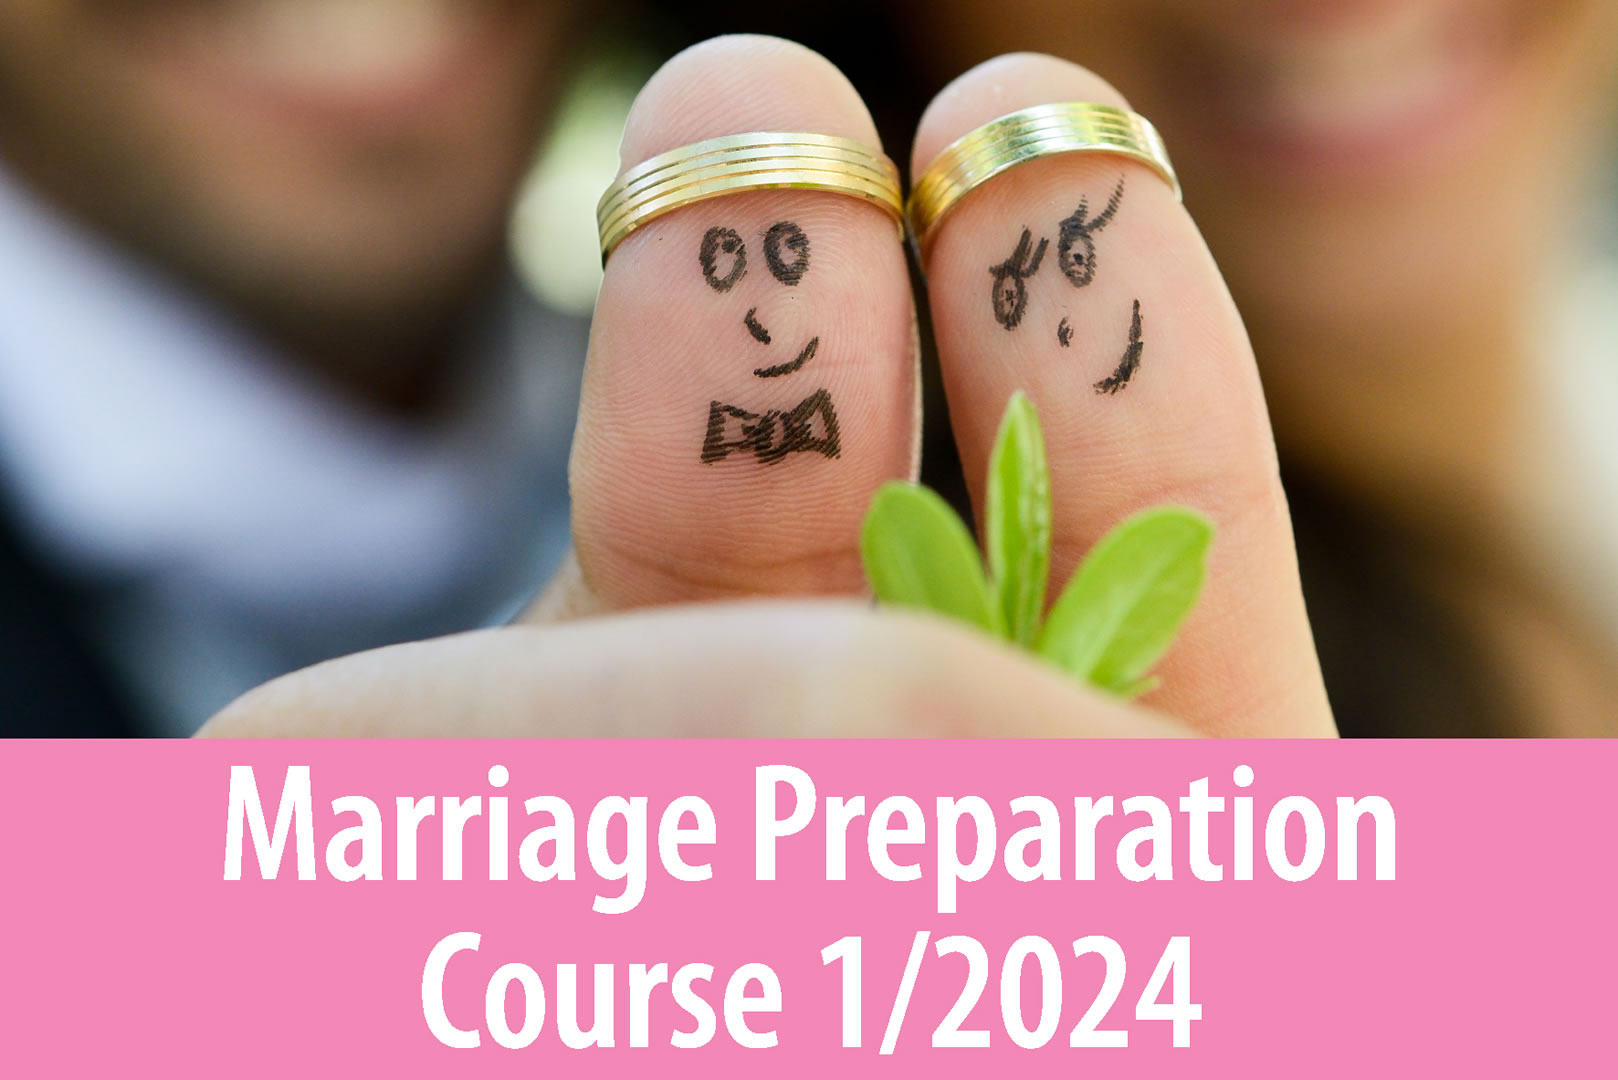 Marriage Preparation Course 1/2024